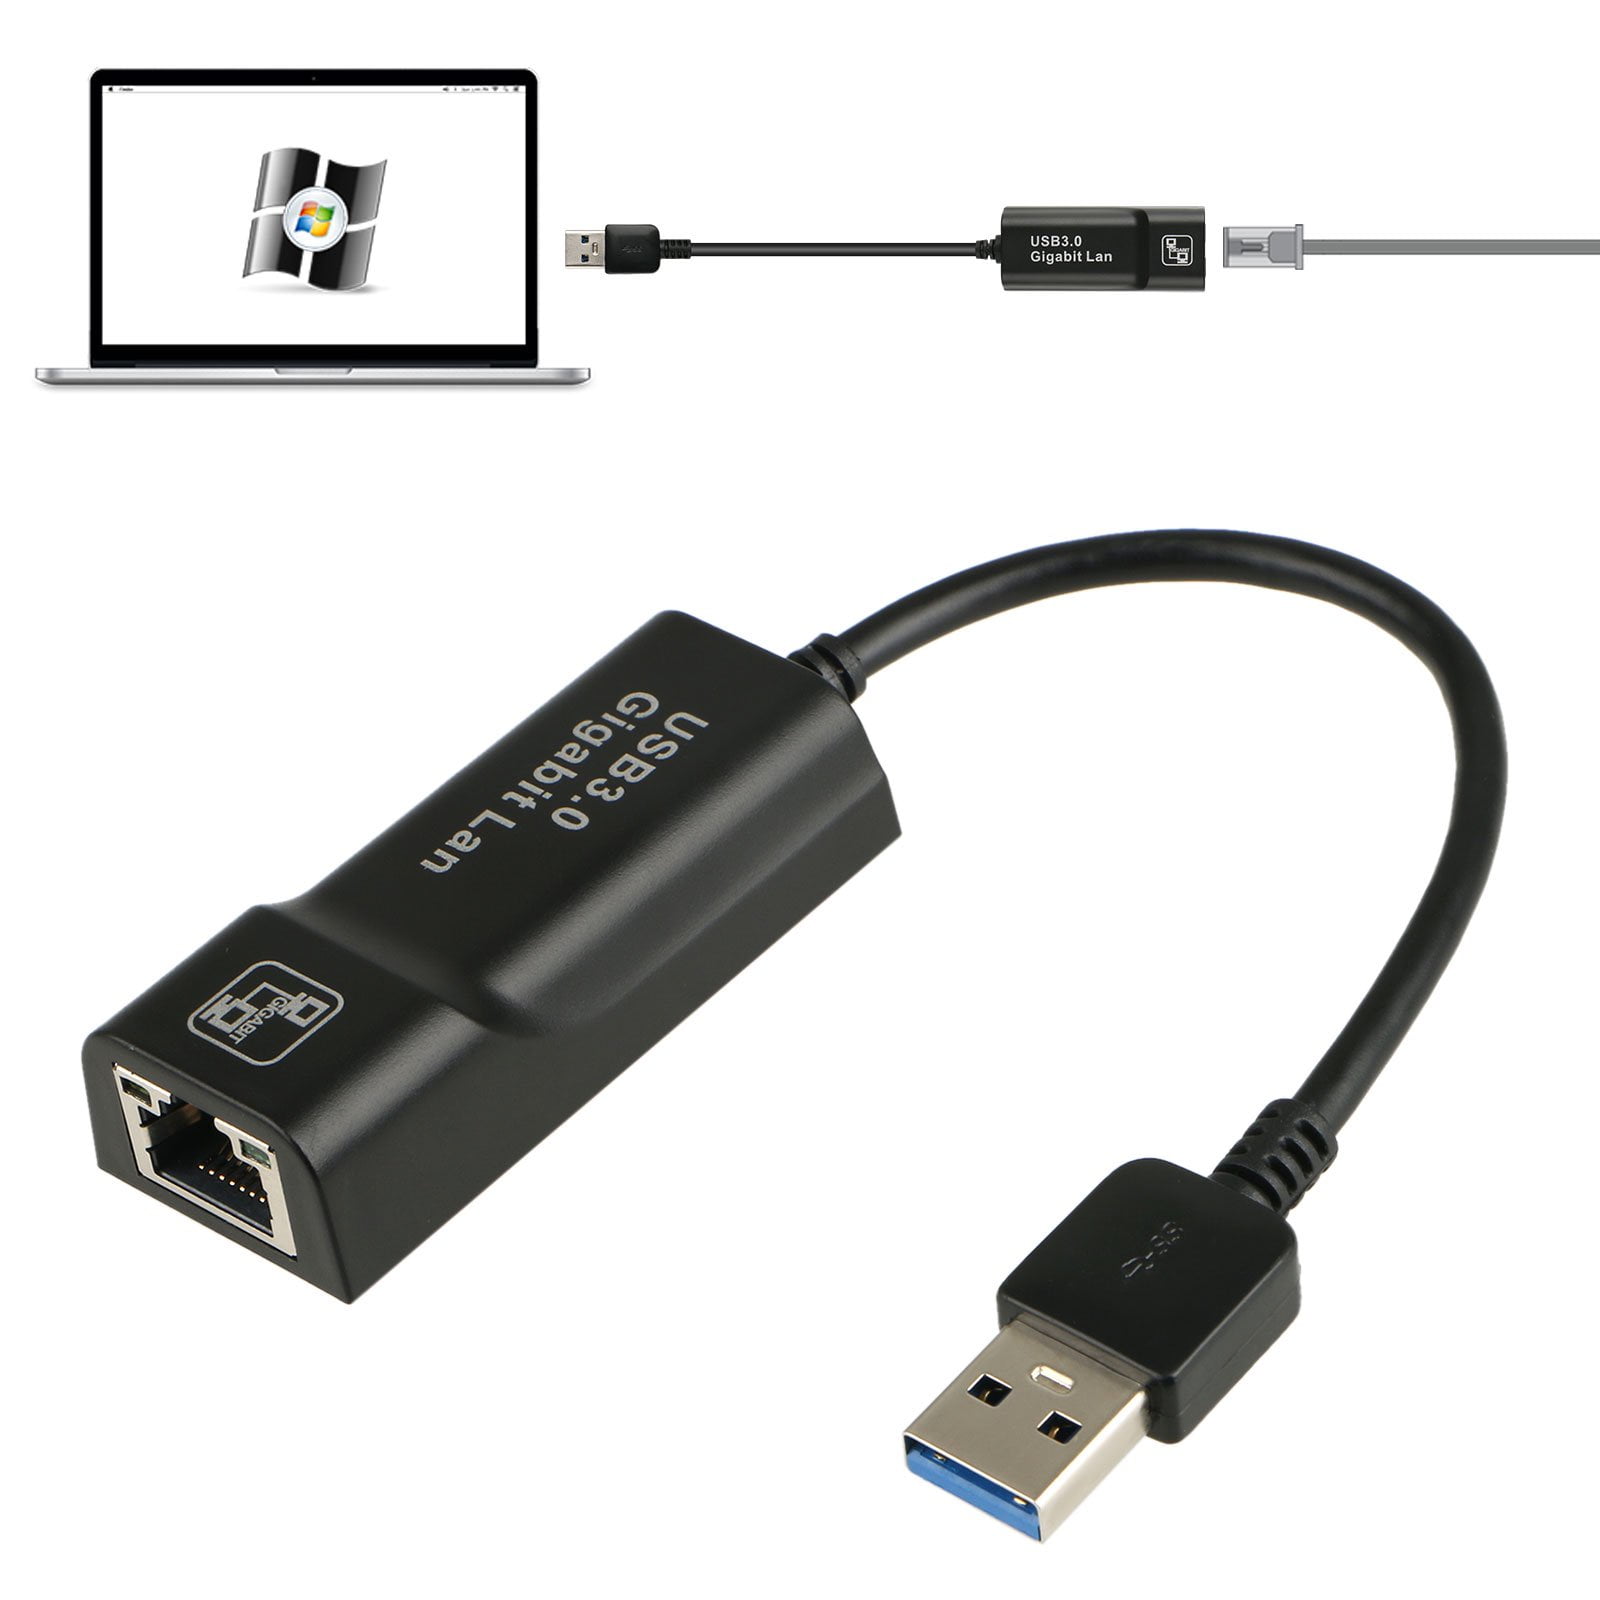 USB 3.0 to Ethernet - High Speed Syncwire 10/100/1000 Gigabit RJ45 Network Ethernet Adapter for Macbook, Mac Pro/Mini, iMac, HP, Lenovo, Dell, Pro, Windows XP,7,8,10&More-Black - Walmart.com